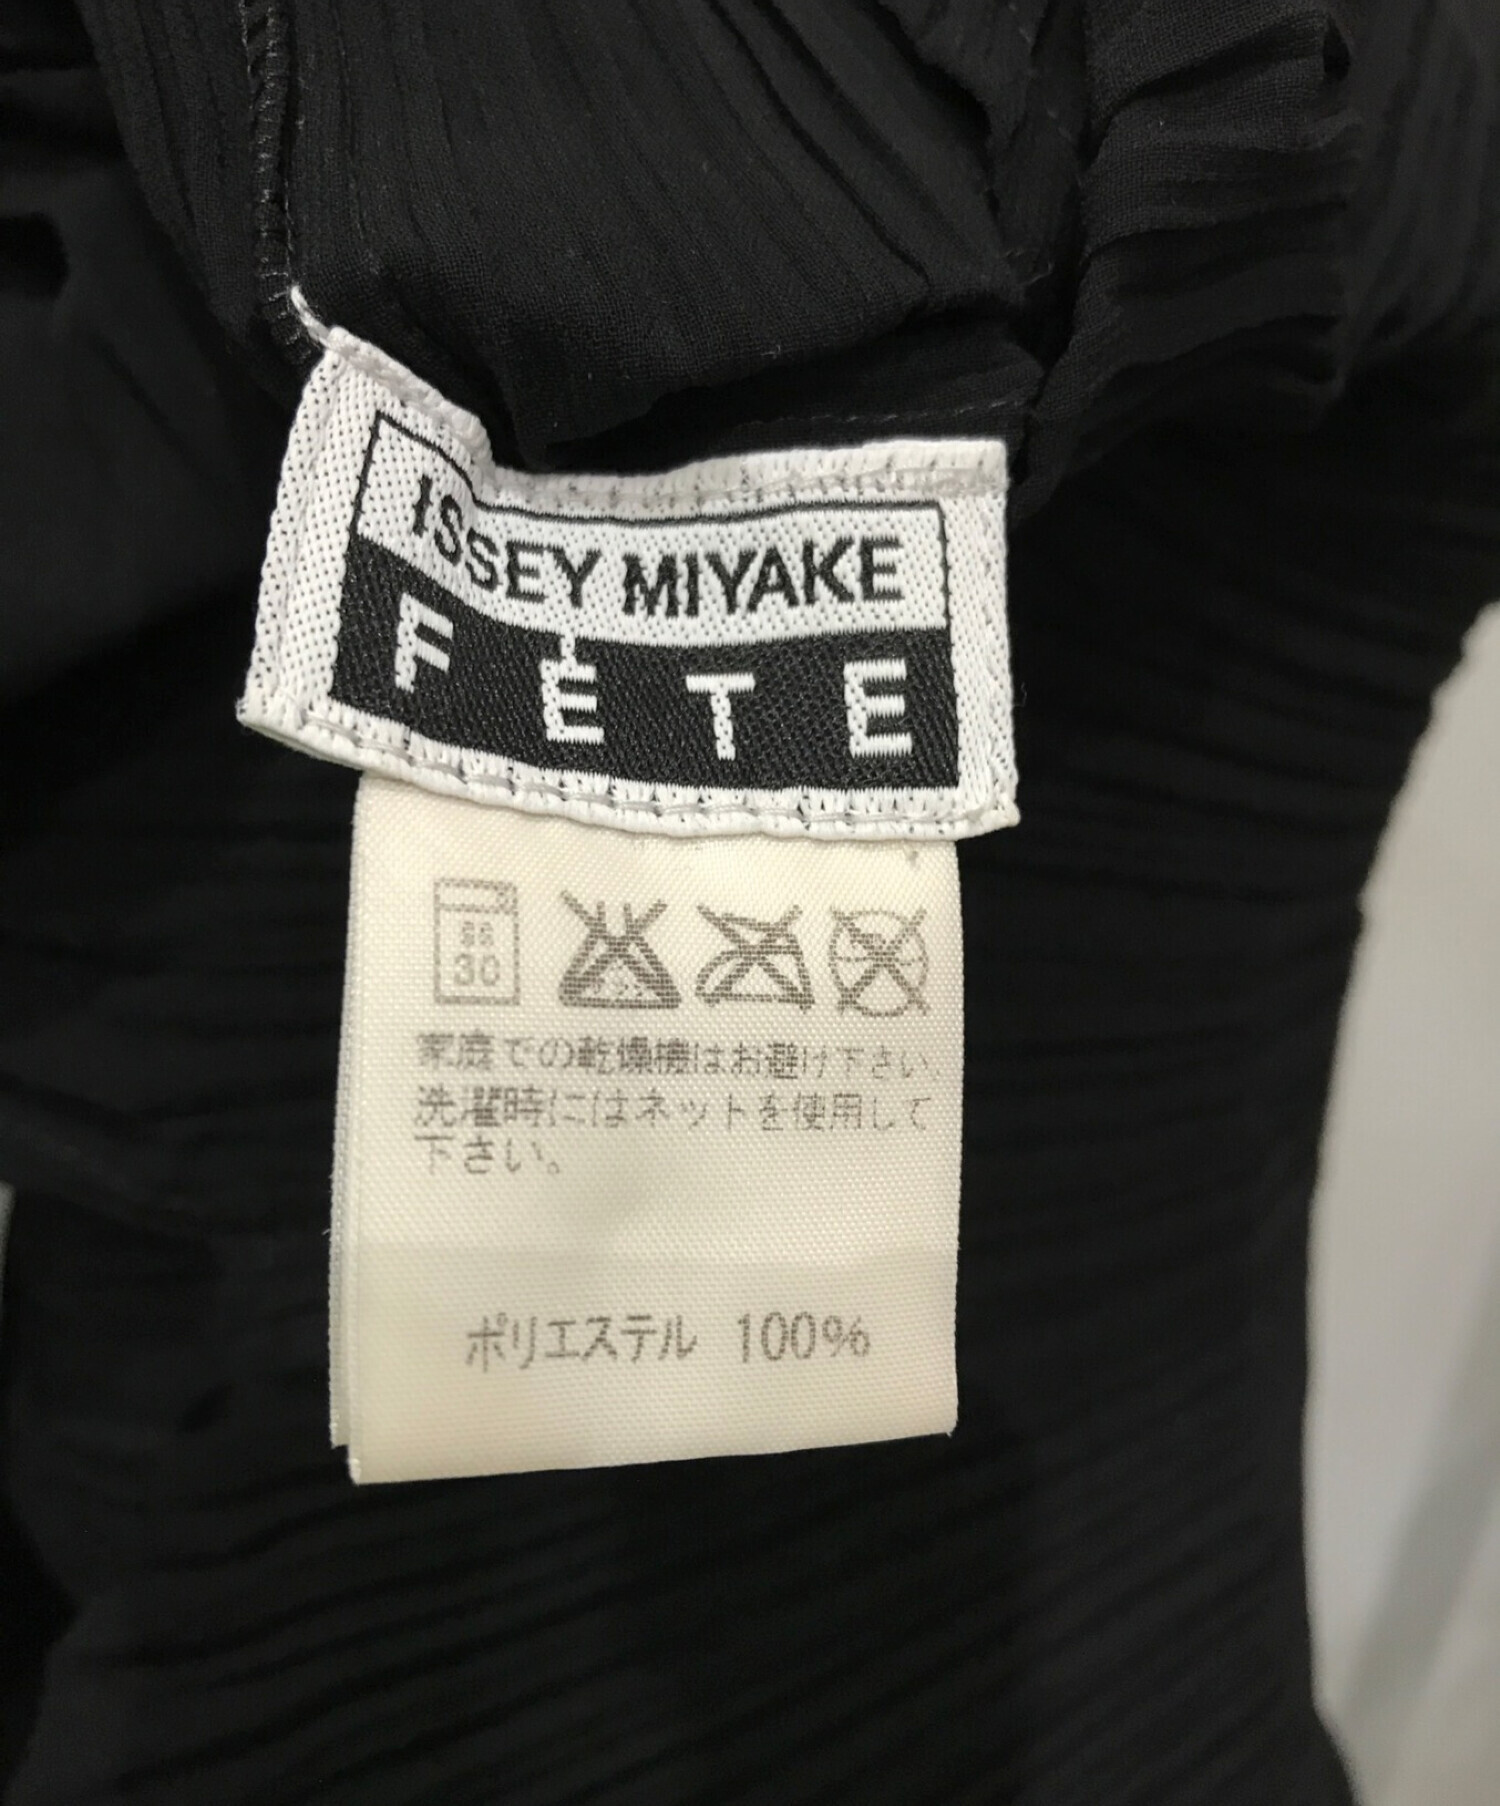 ISSEY MIYAKE FETE (イッセイミヤケフェット) プリーツブラウス ブラック サイズ:2